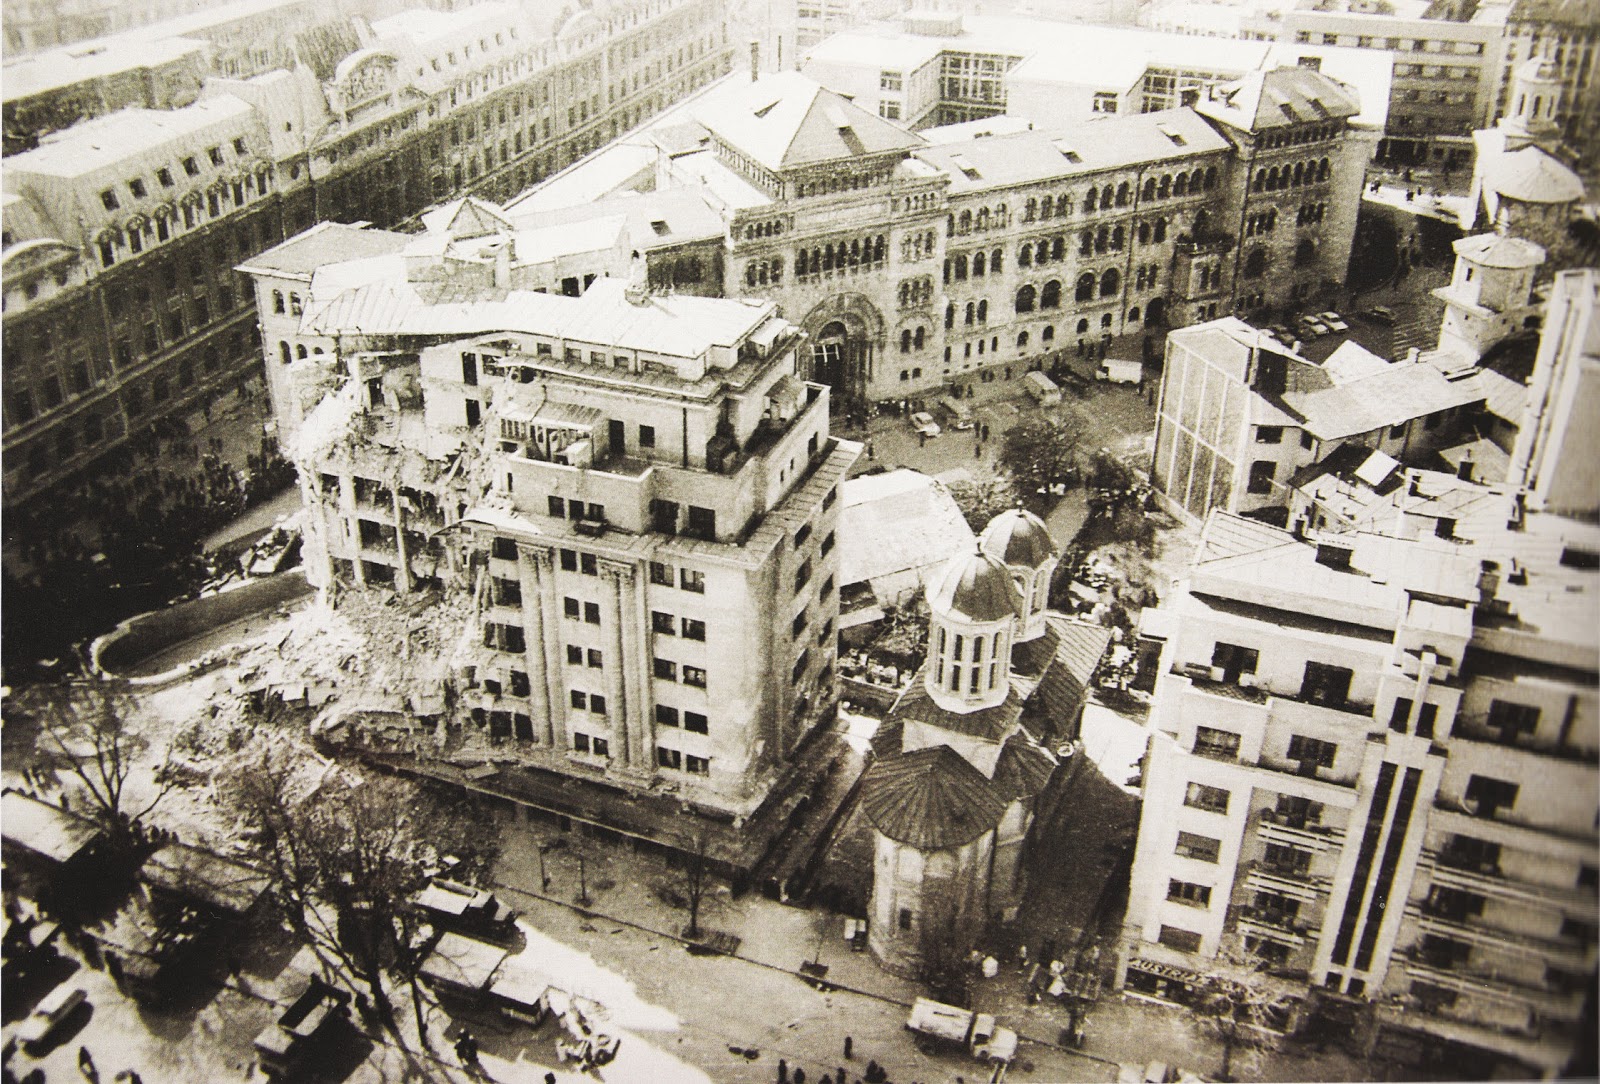 Capitala a fost devastata la cutremurul din '77